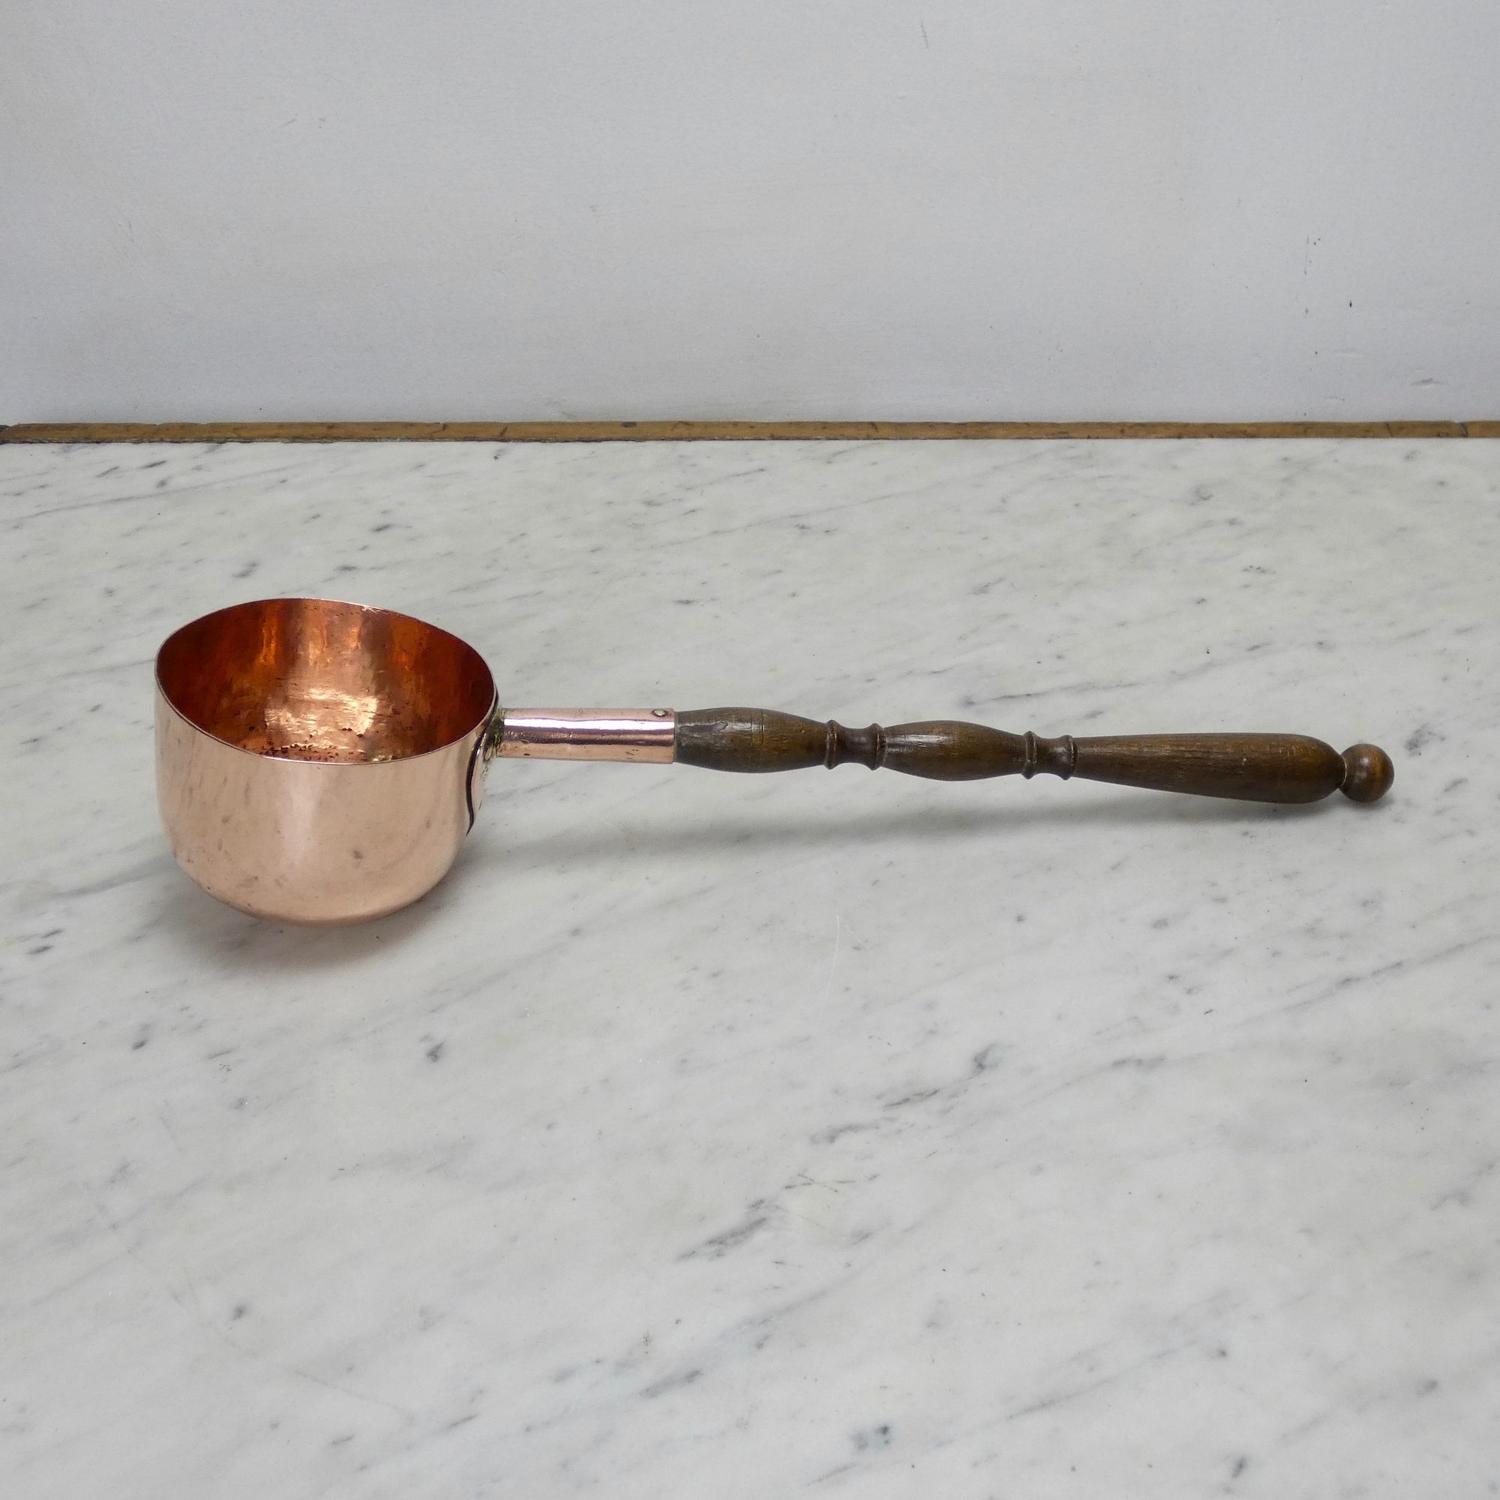 Copper ladle or muller